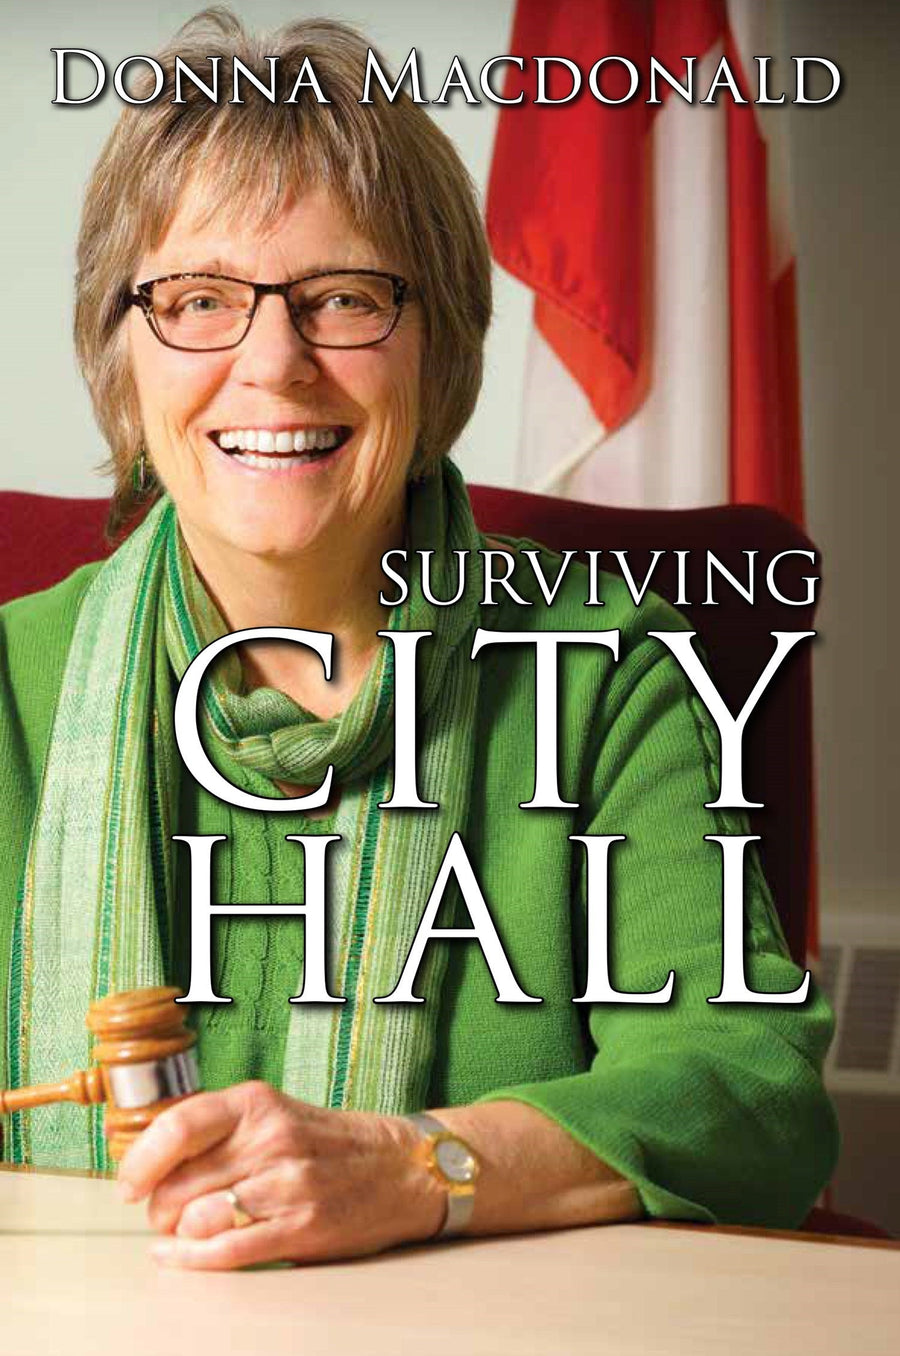 Surviving City Hall